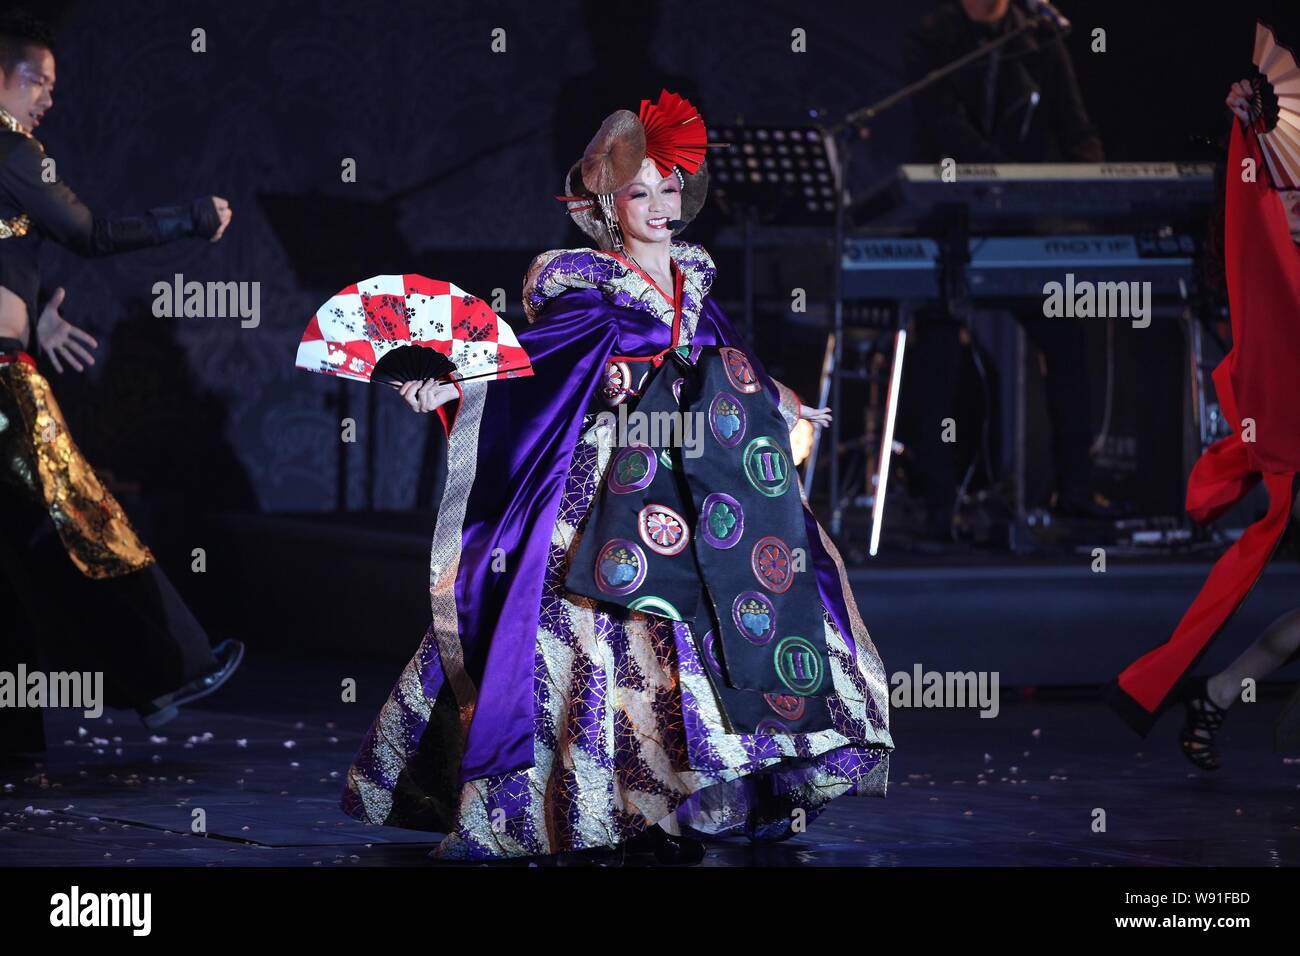 Japanese singer Kumi Koda performs during her Taiwan Live 2013 concert in Taipei, Taiwan, 12 October 2013. Stock Photo